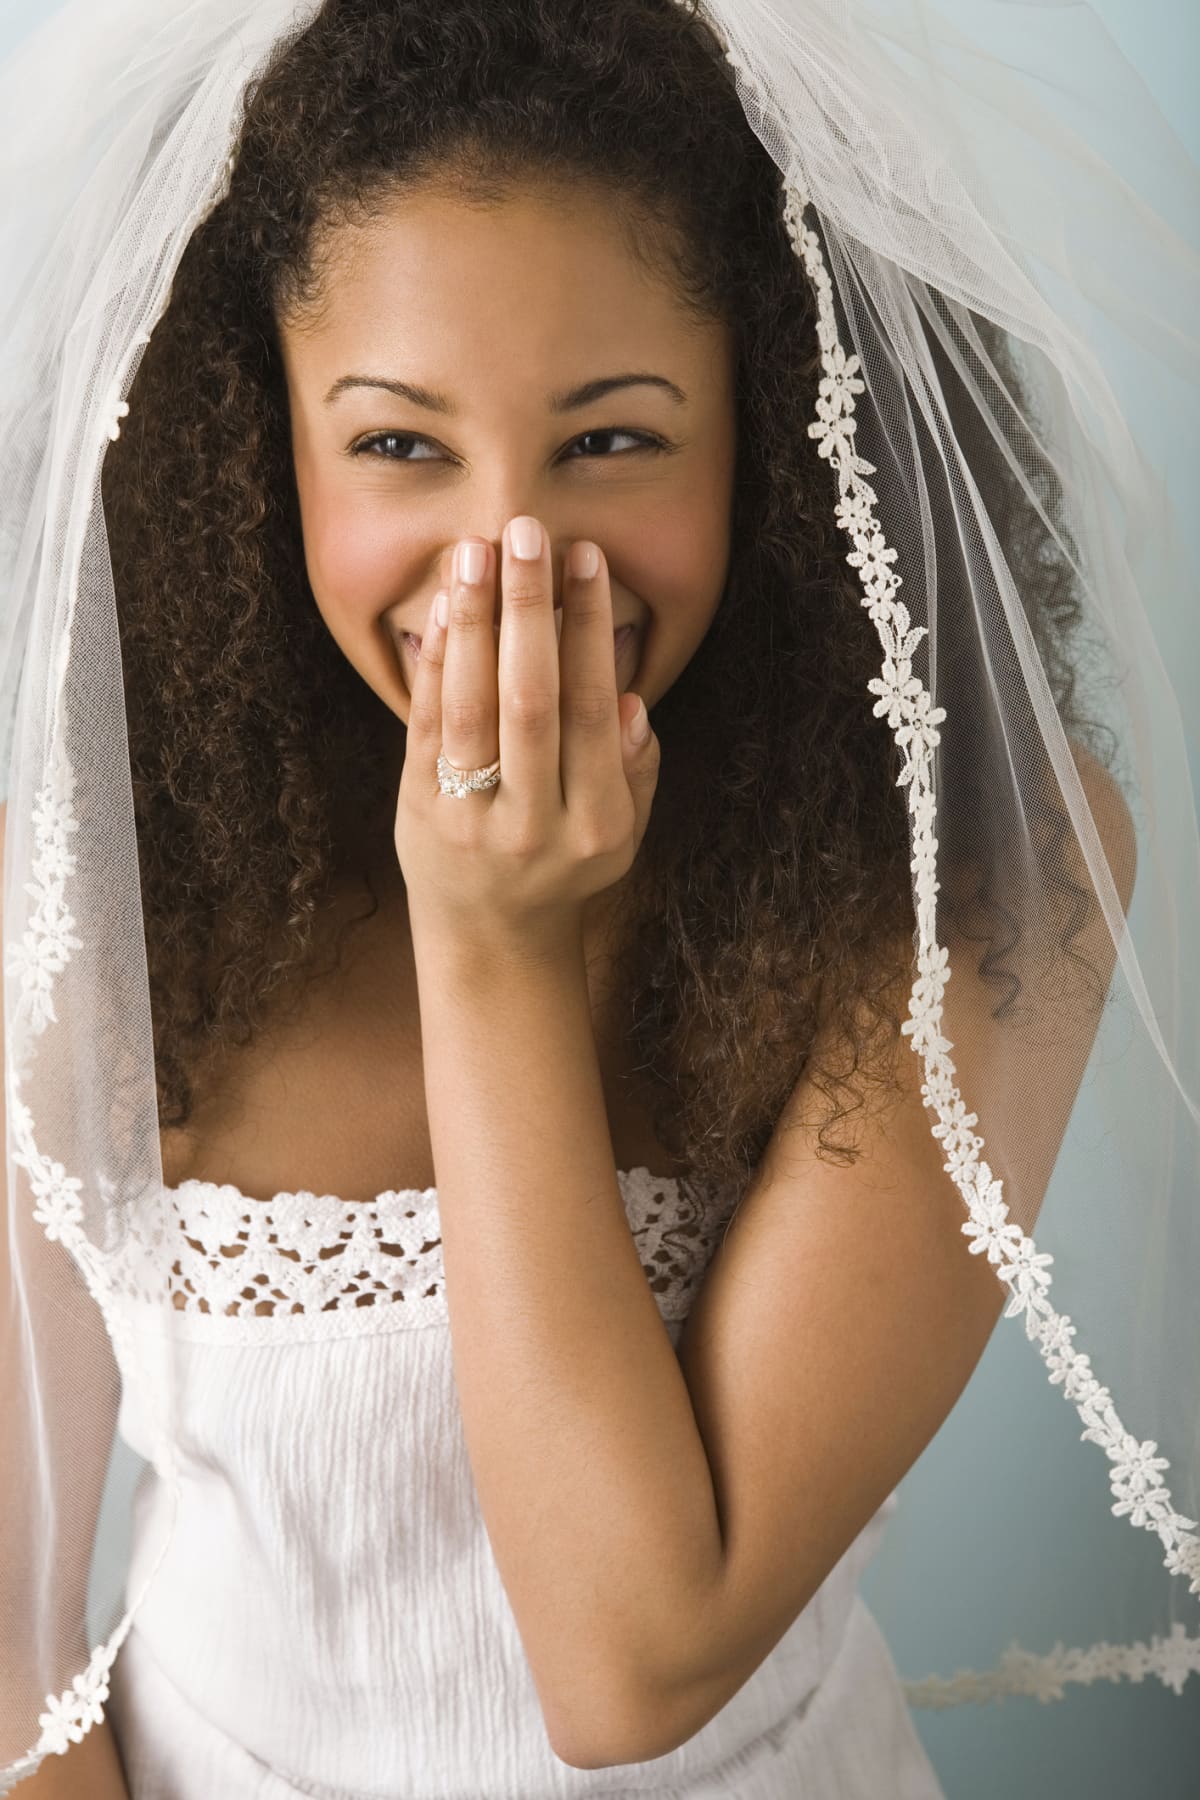 Teenage girl (16-17) wearing veil and wedding dress, laughing.